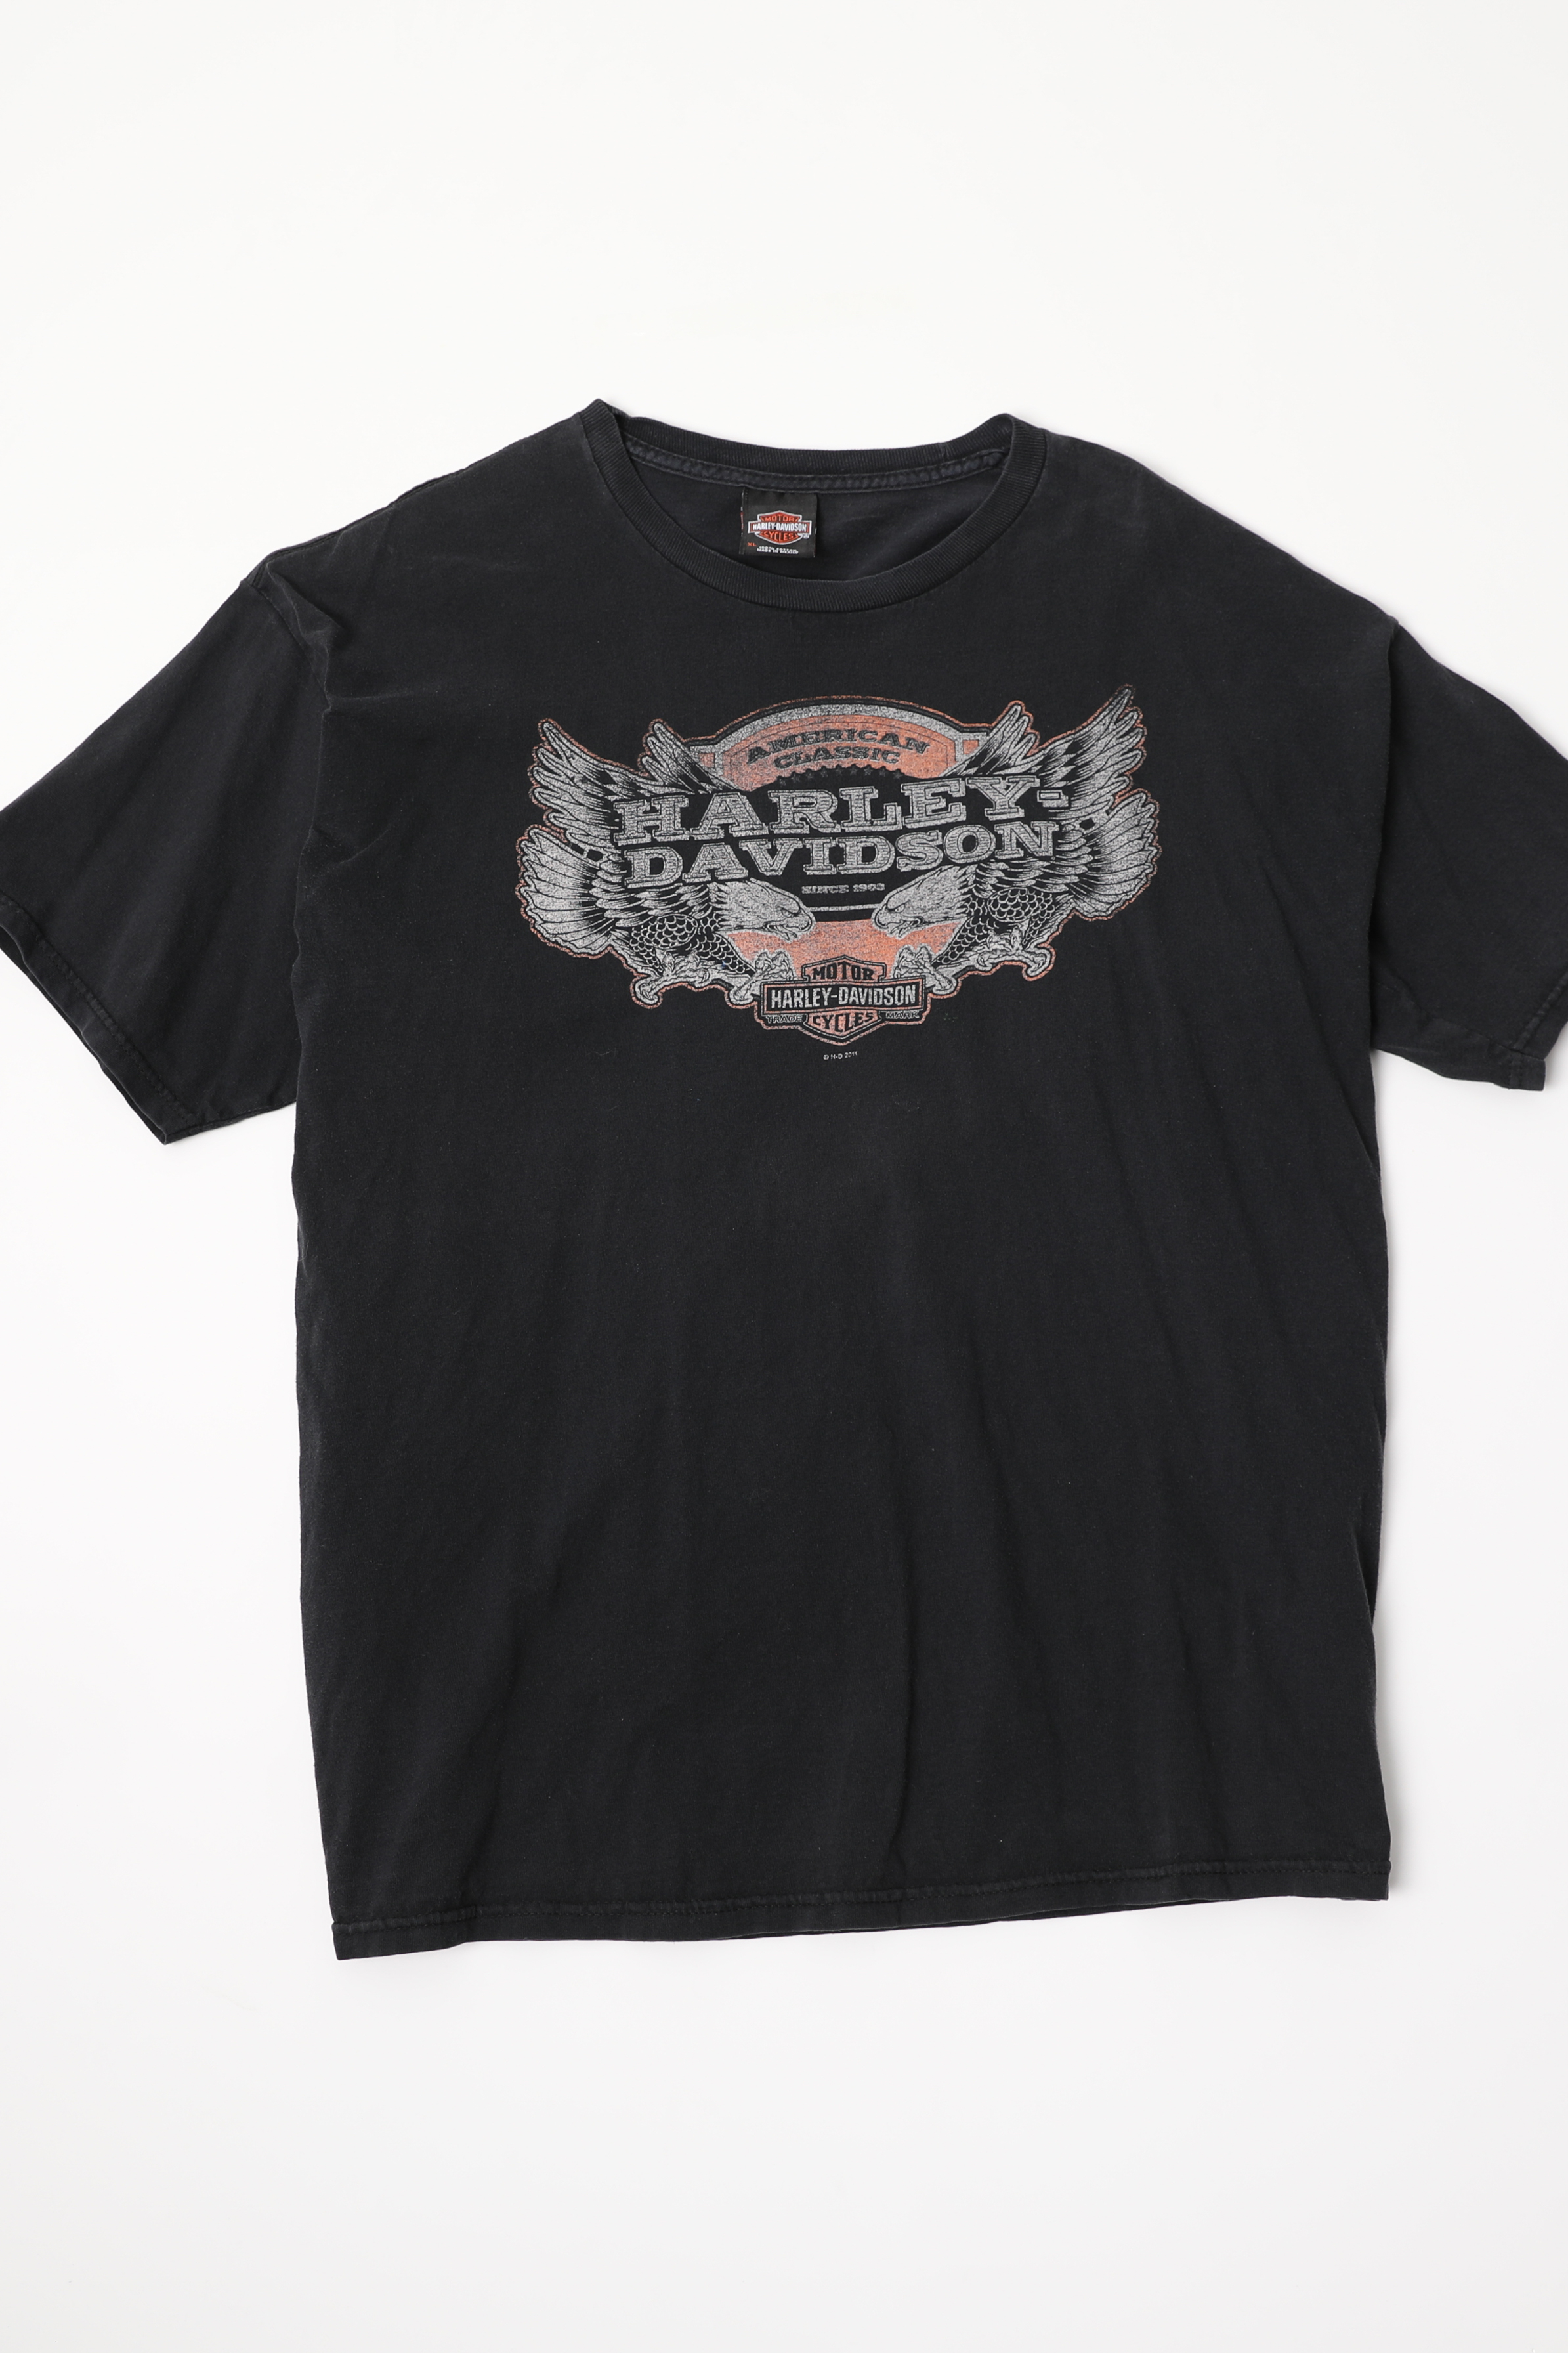 [XL] 할리 데이비슨 티셔츠 (H622)